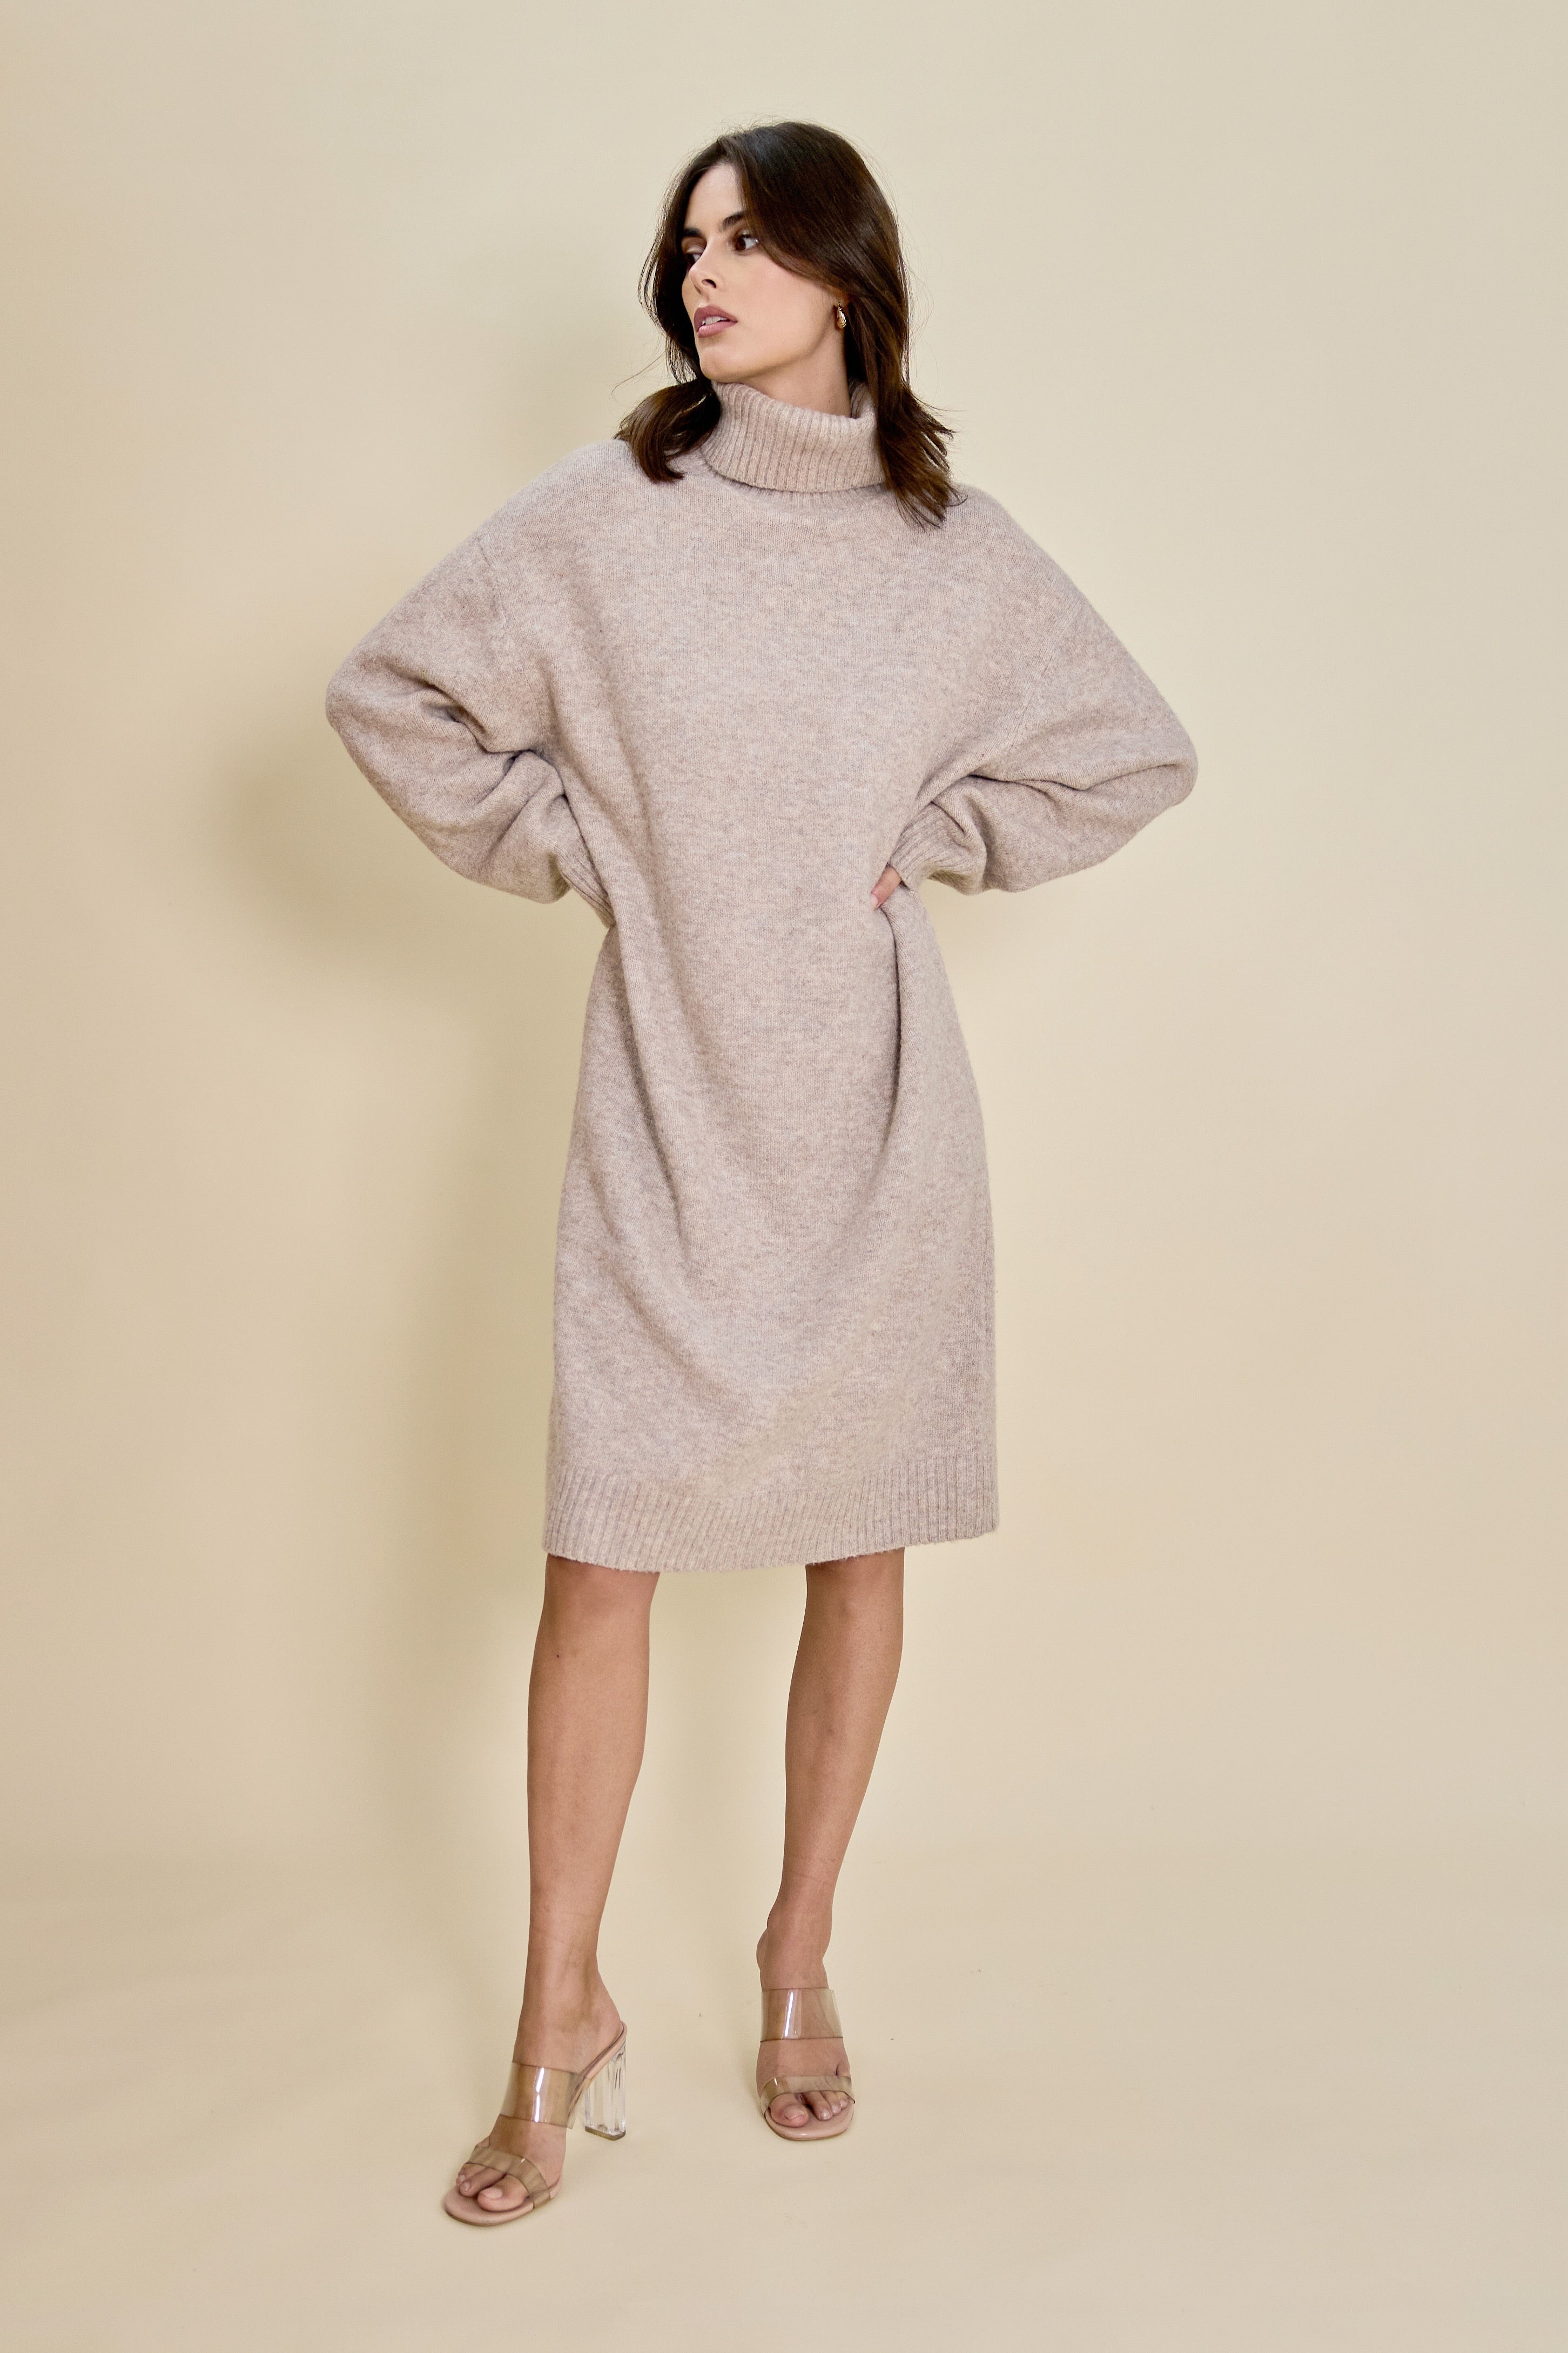 Knit turtleneck mid-length sweater dress